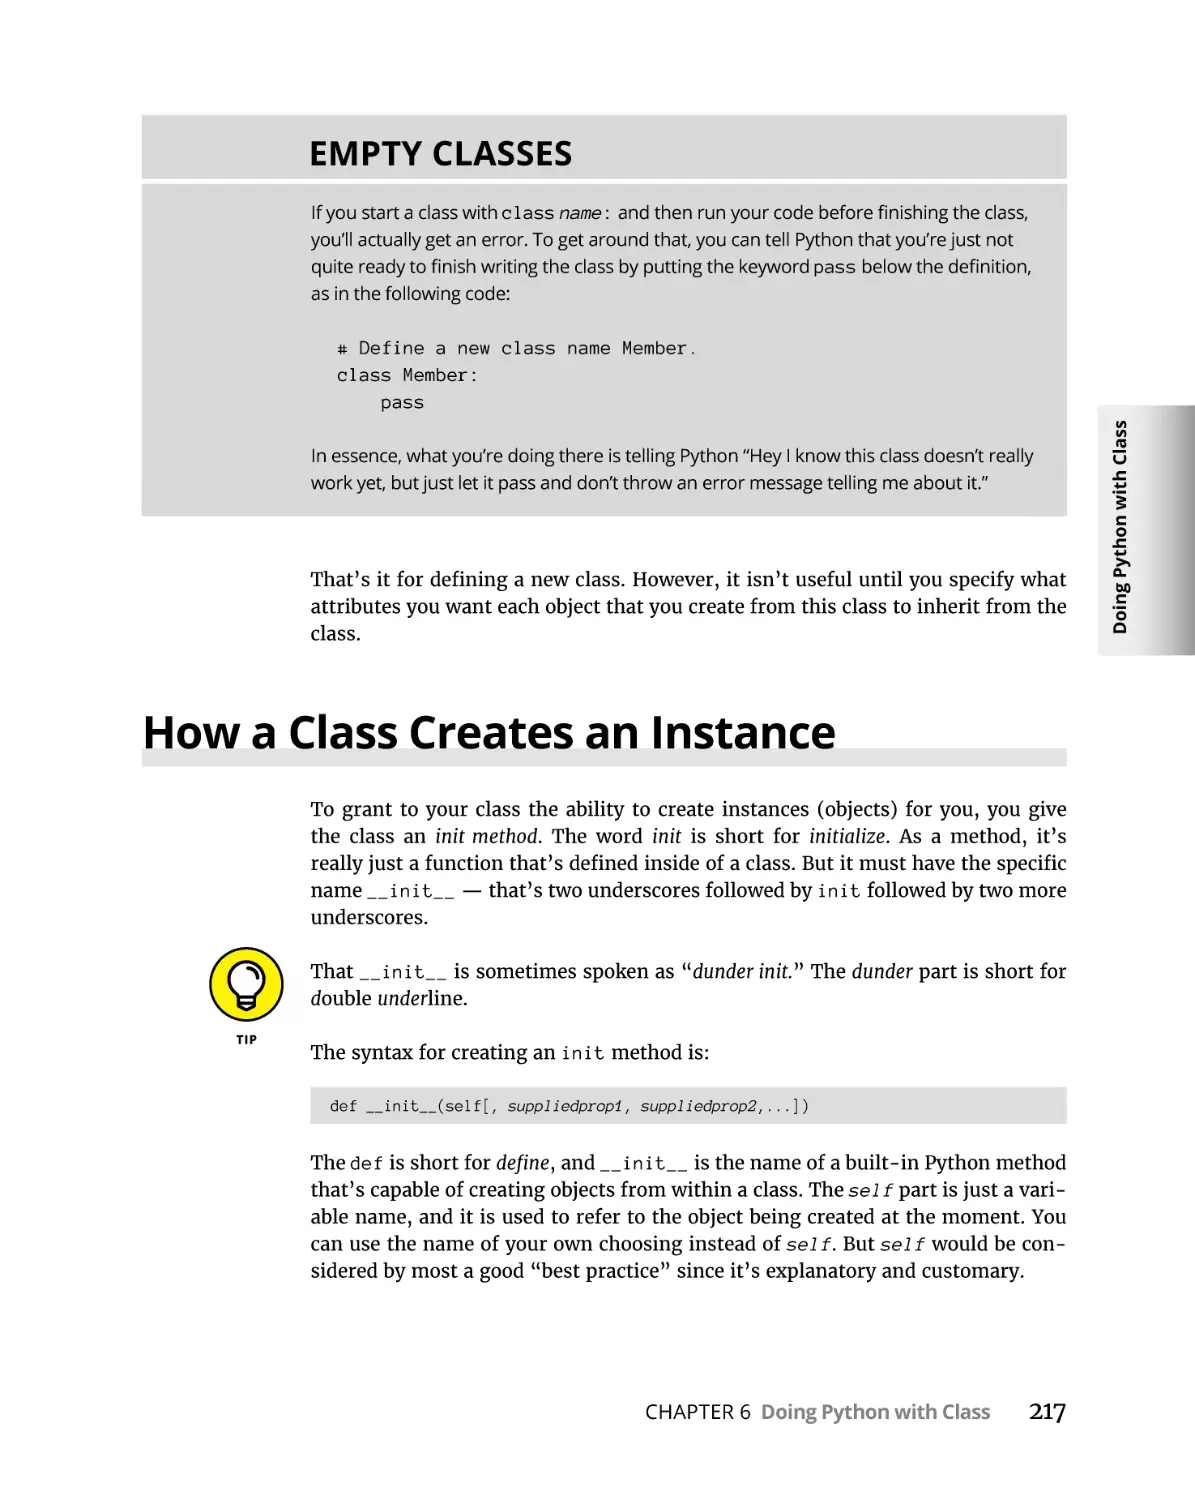 How a Class Creates an Instance